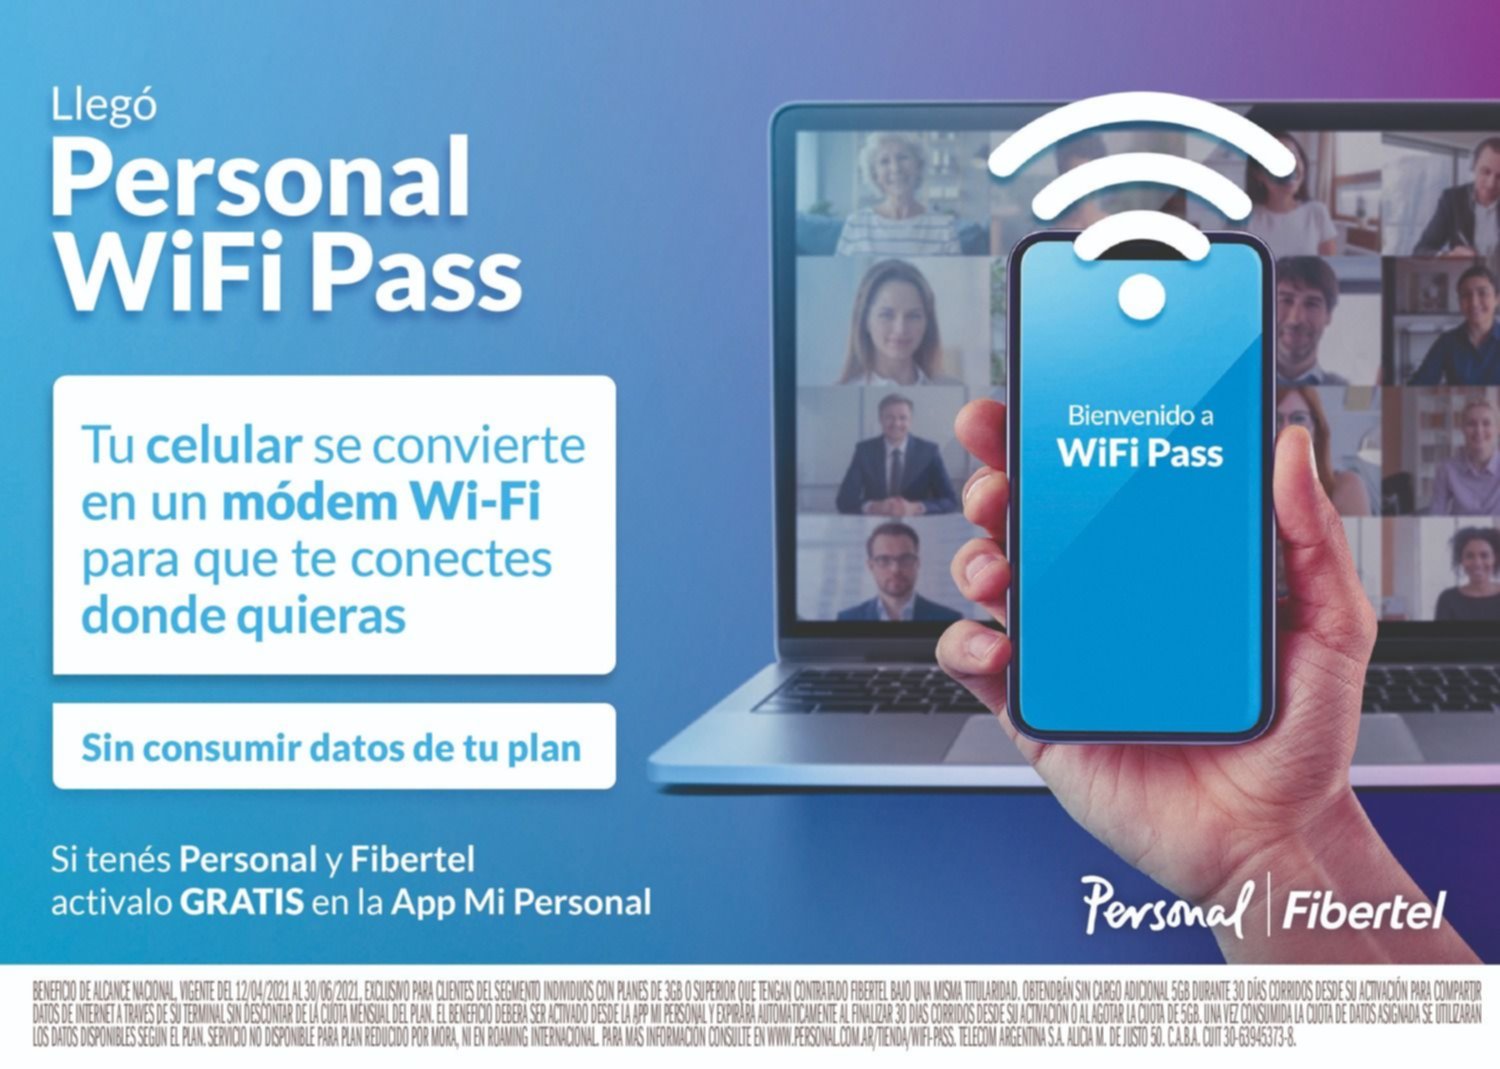  WiFi Pass: compartir internet desde el celular sin gastar gigas del plan